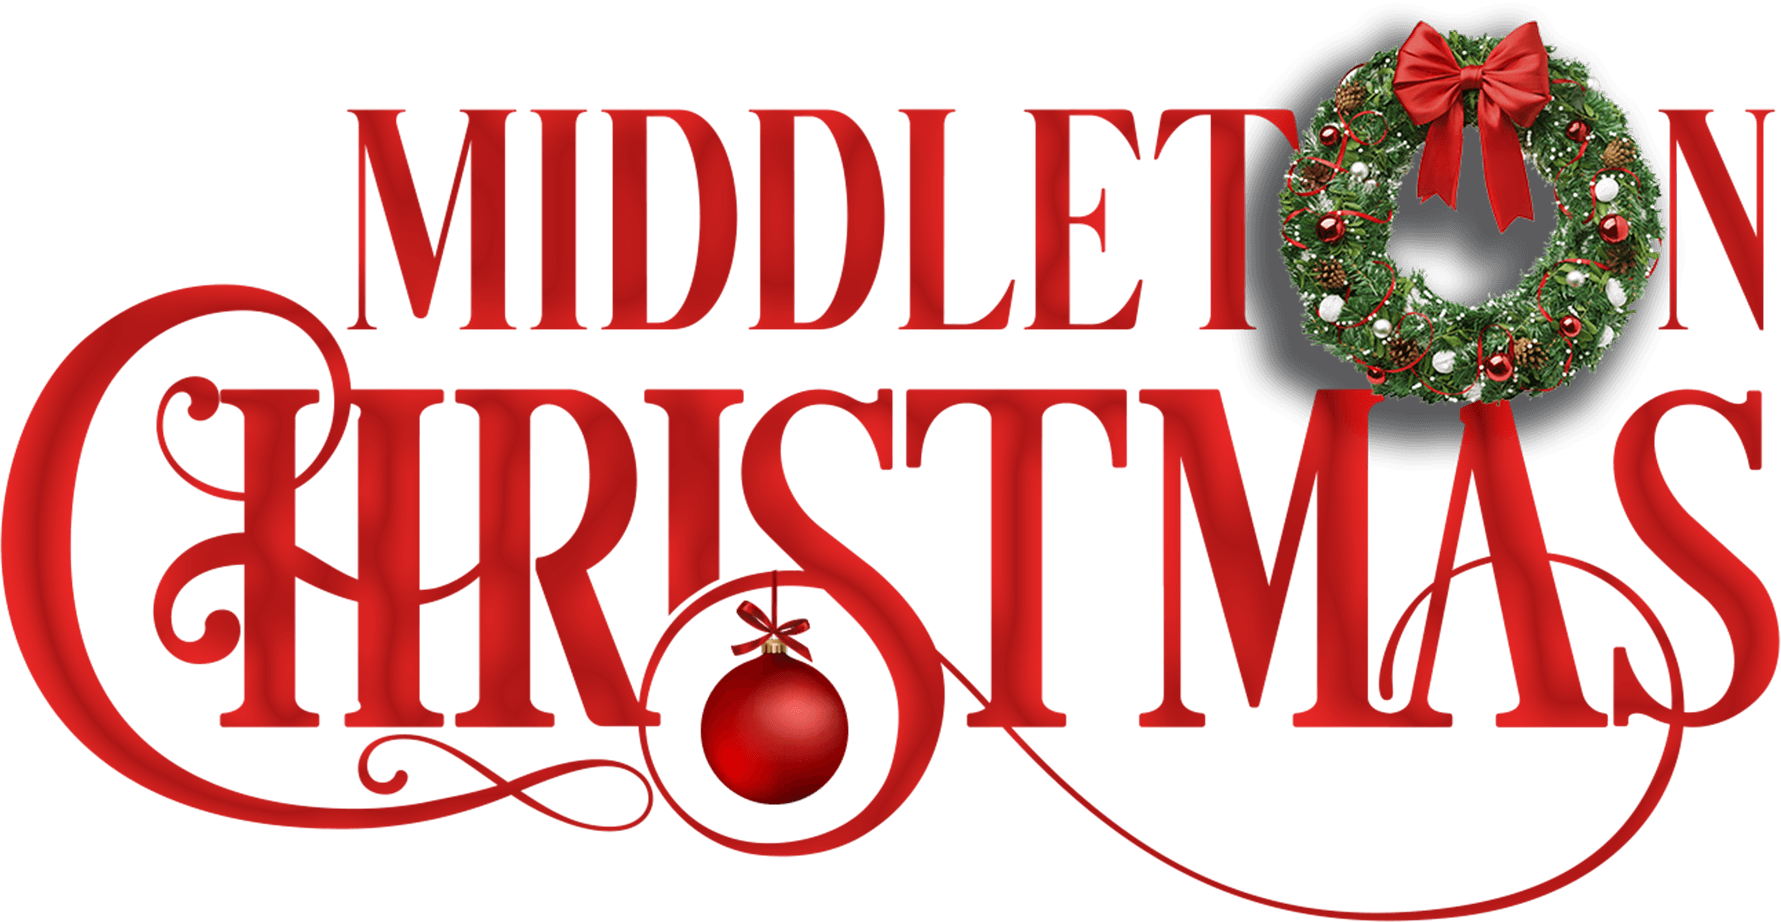 Middleton Christmas logo